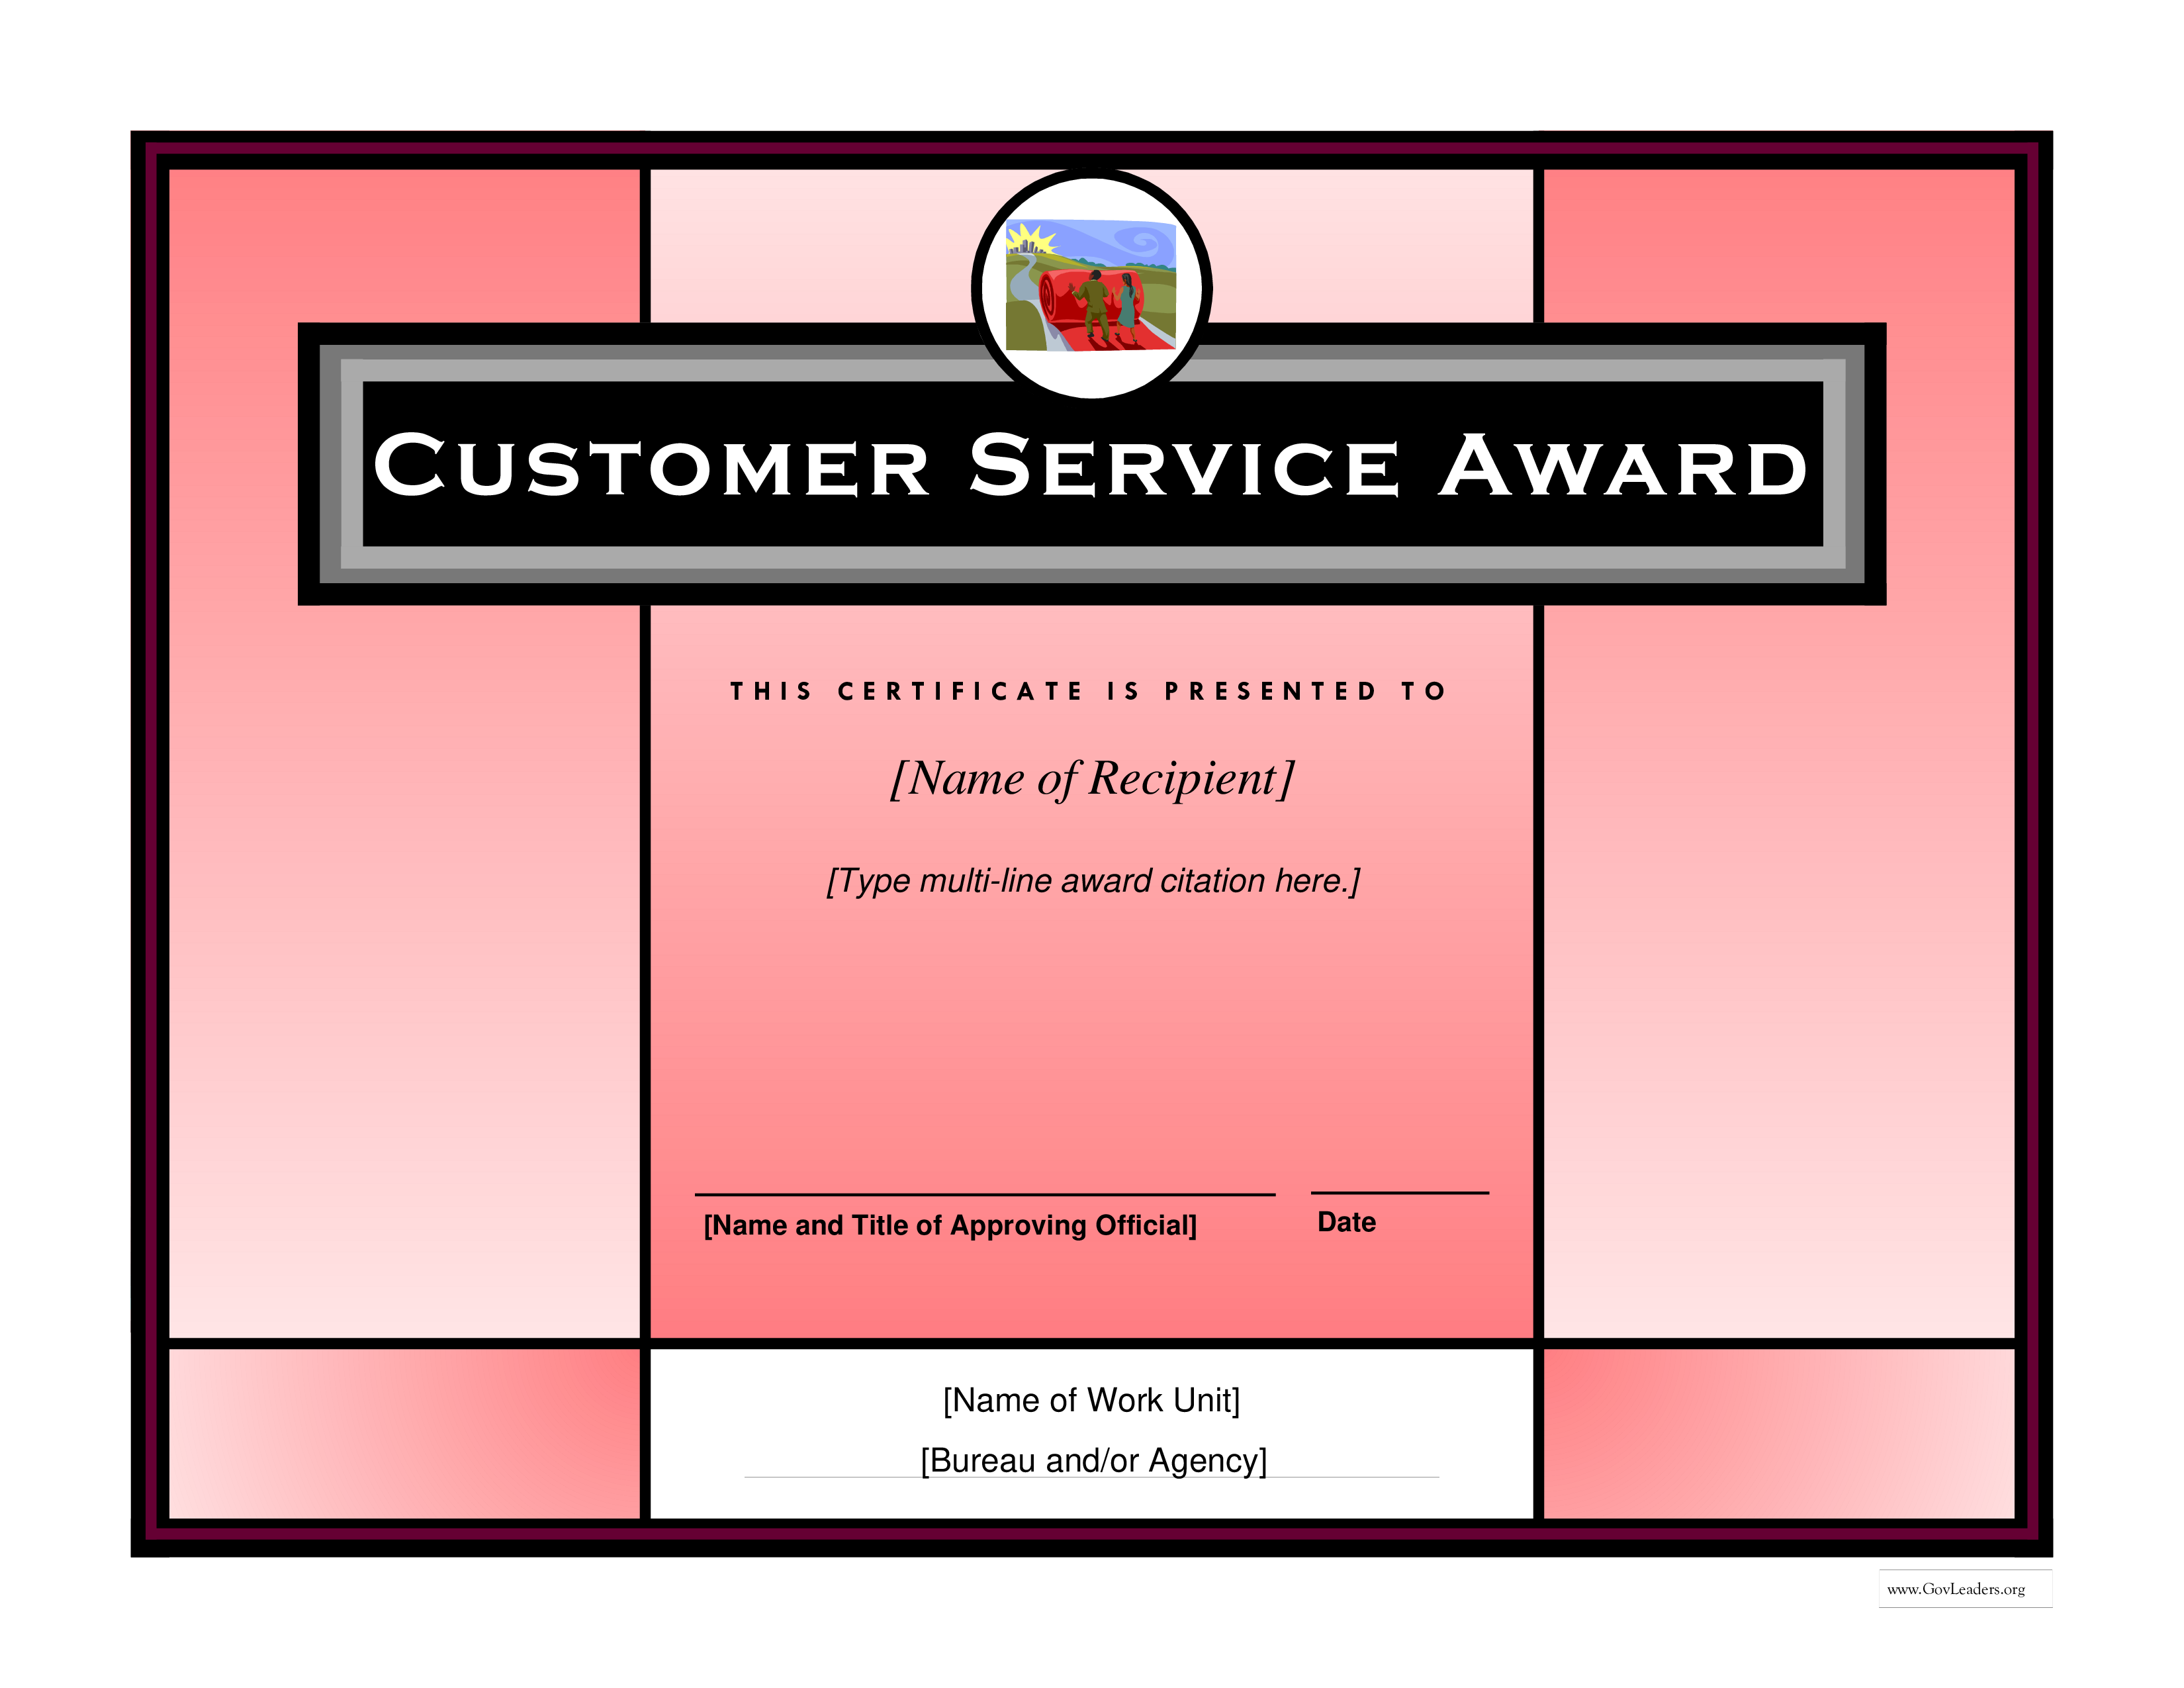 Customer Service Certificate Template from www.allbusinesstemplates.com